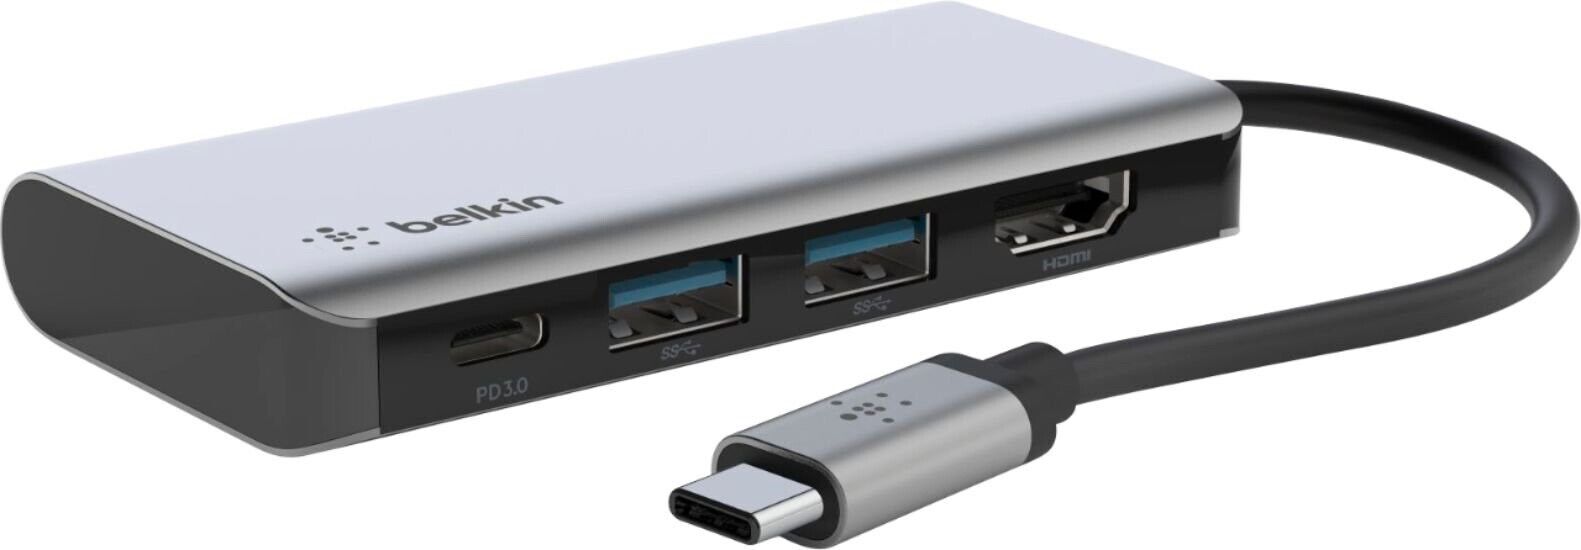 Belkin USB C Hub 4-in-1 Multi-Port Dock 4K HDMI 100W For MacBook Pro and Air